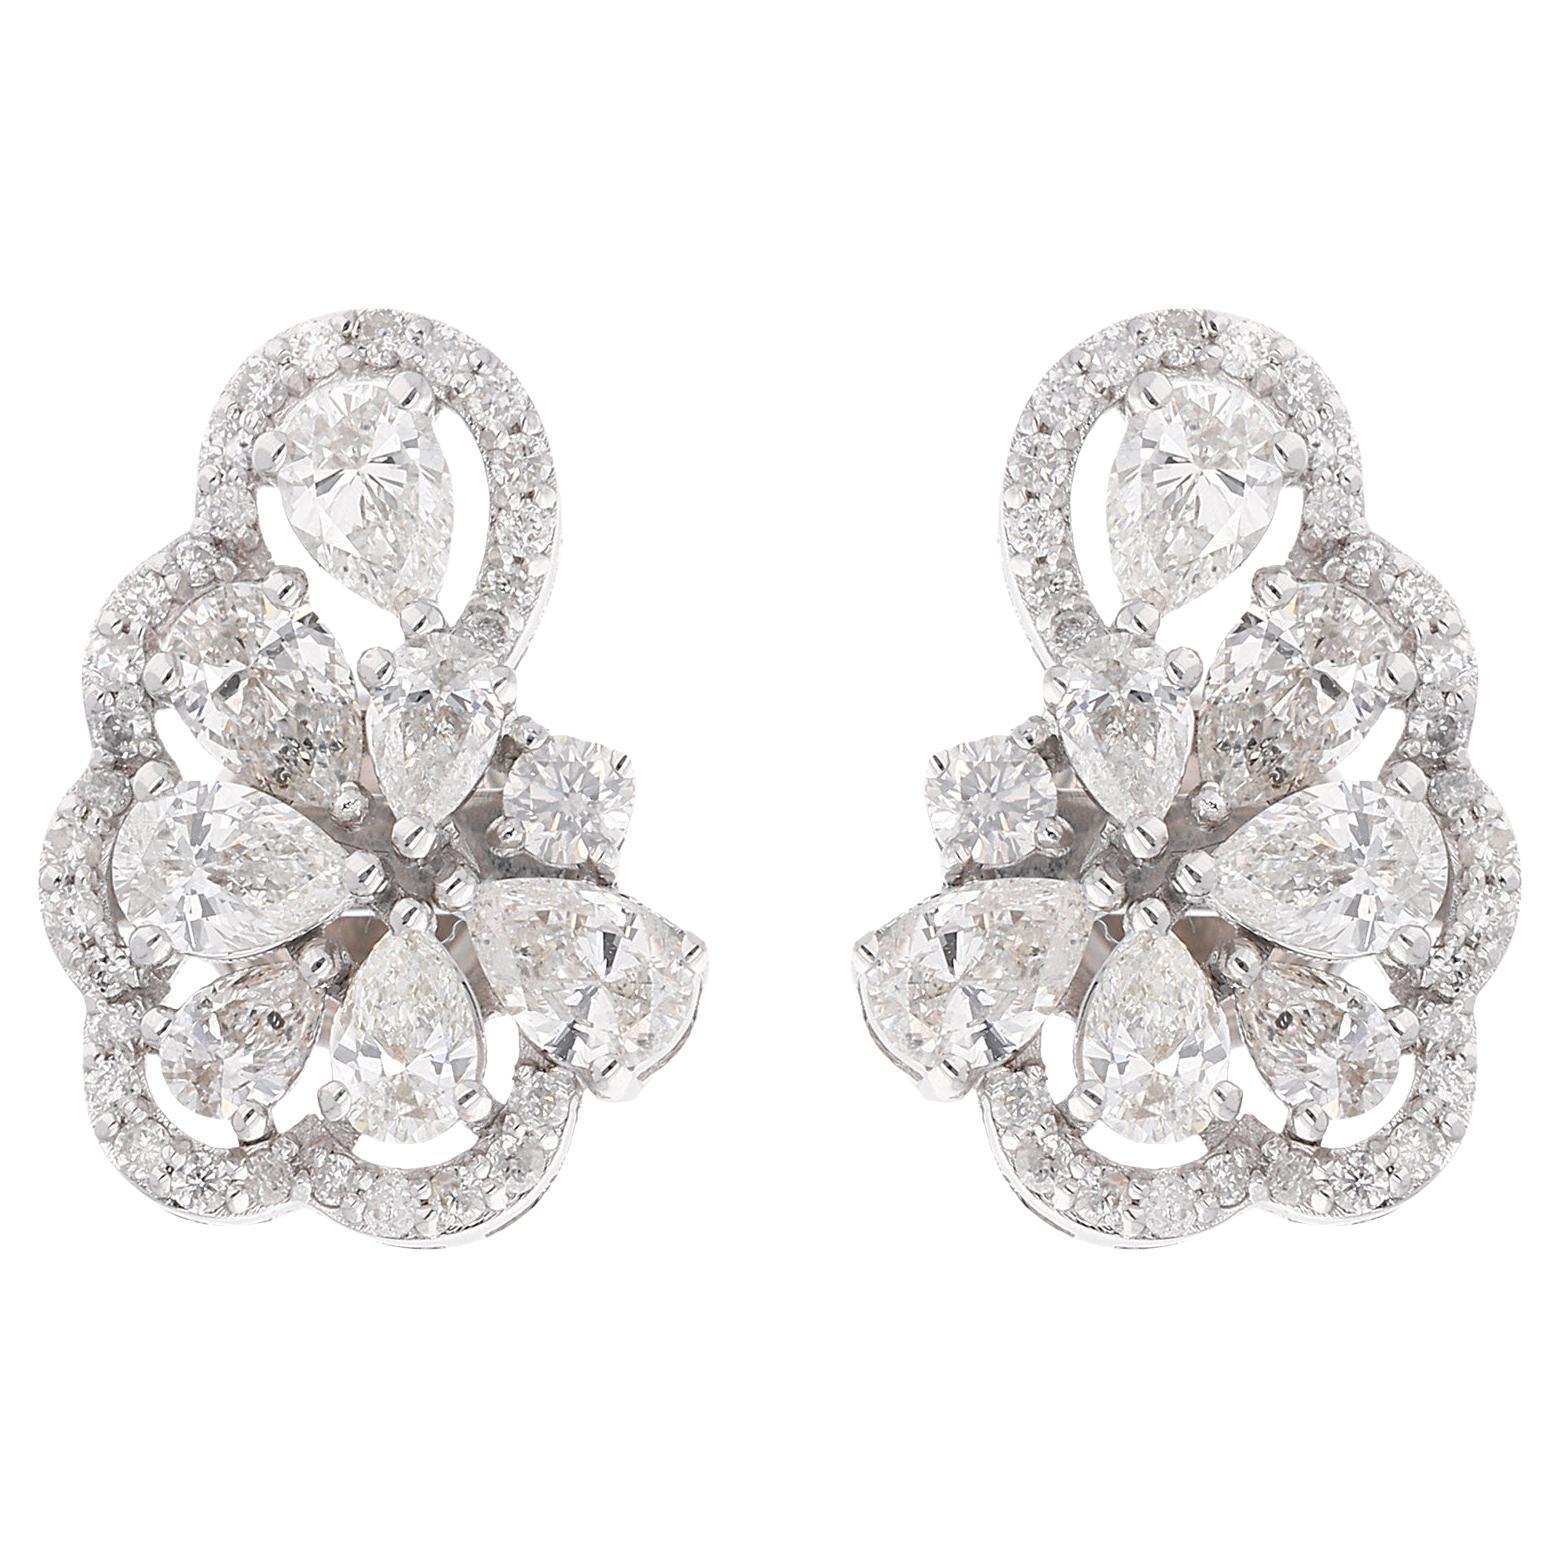 2.76 Ct. Pear & Round Diamond Stud Earrings 18 Karat White Gold Handmade Jewelry